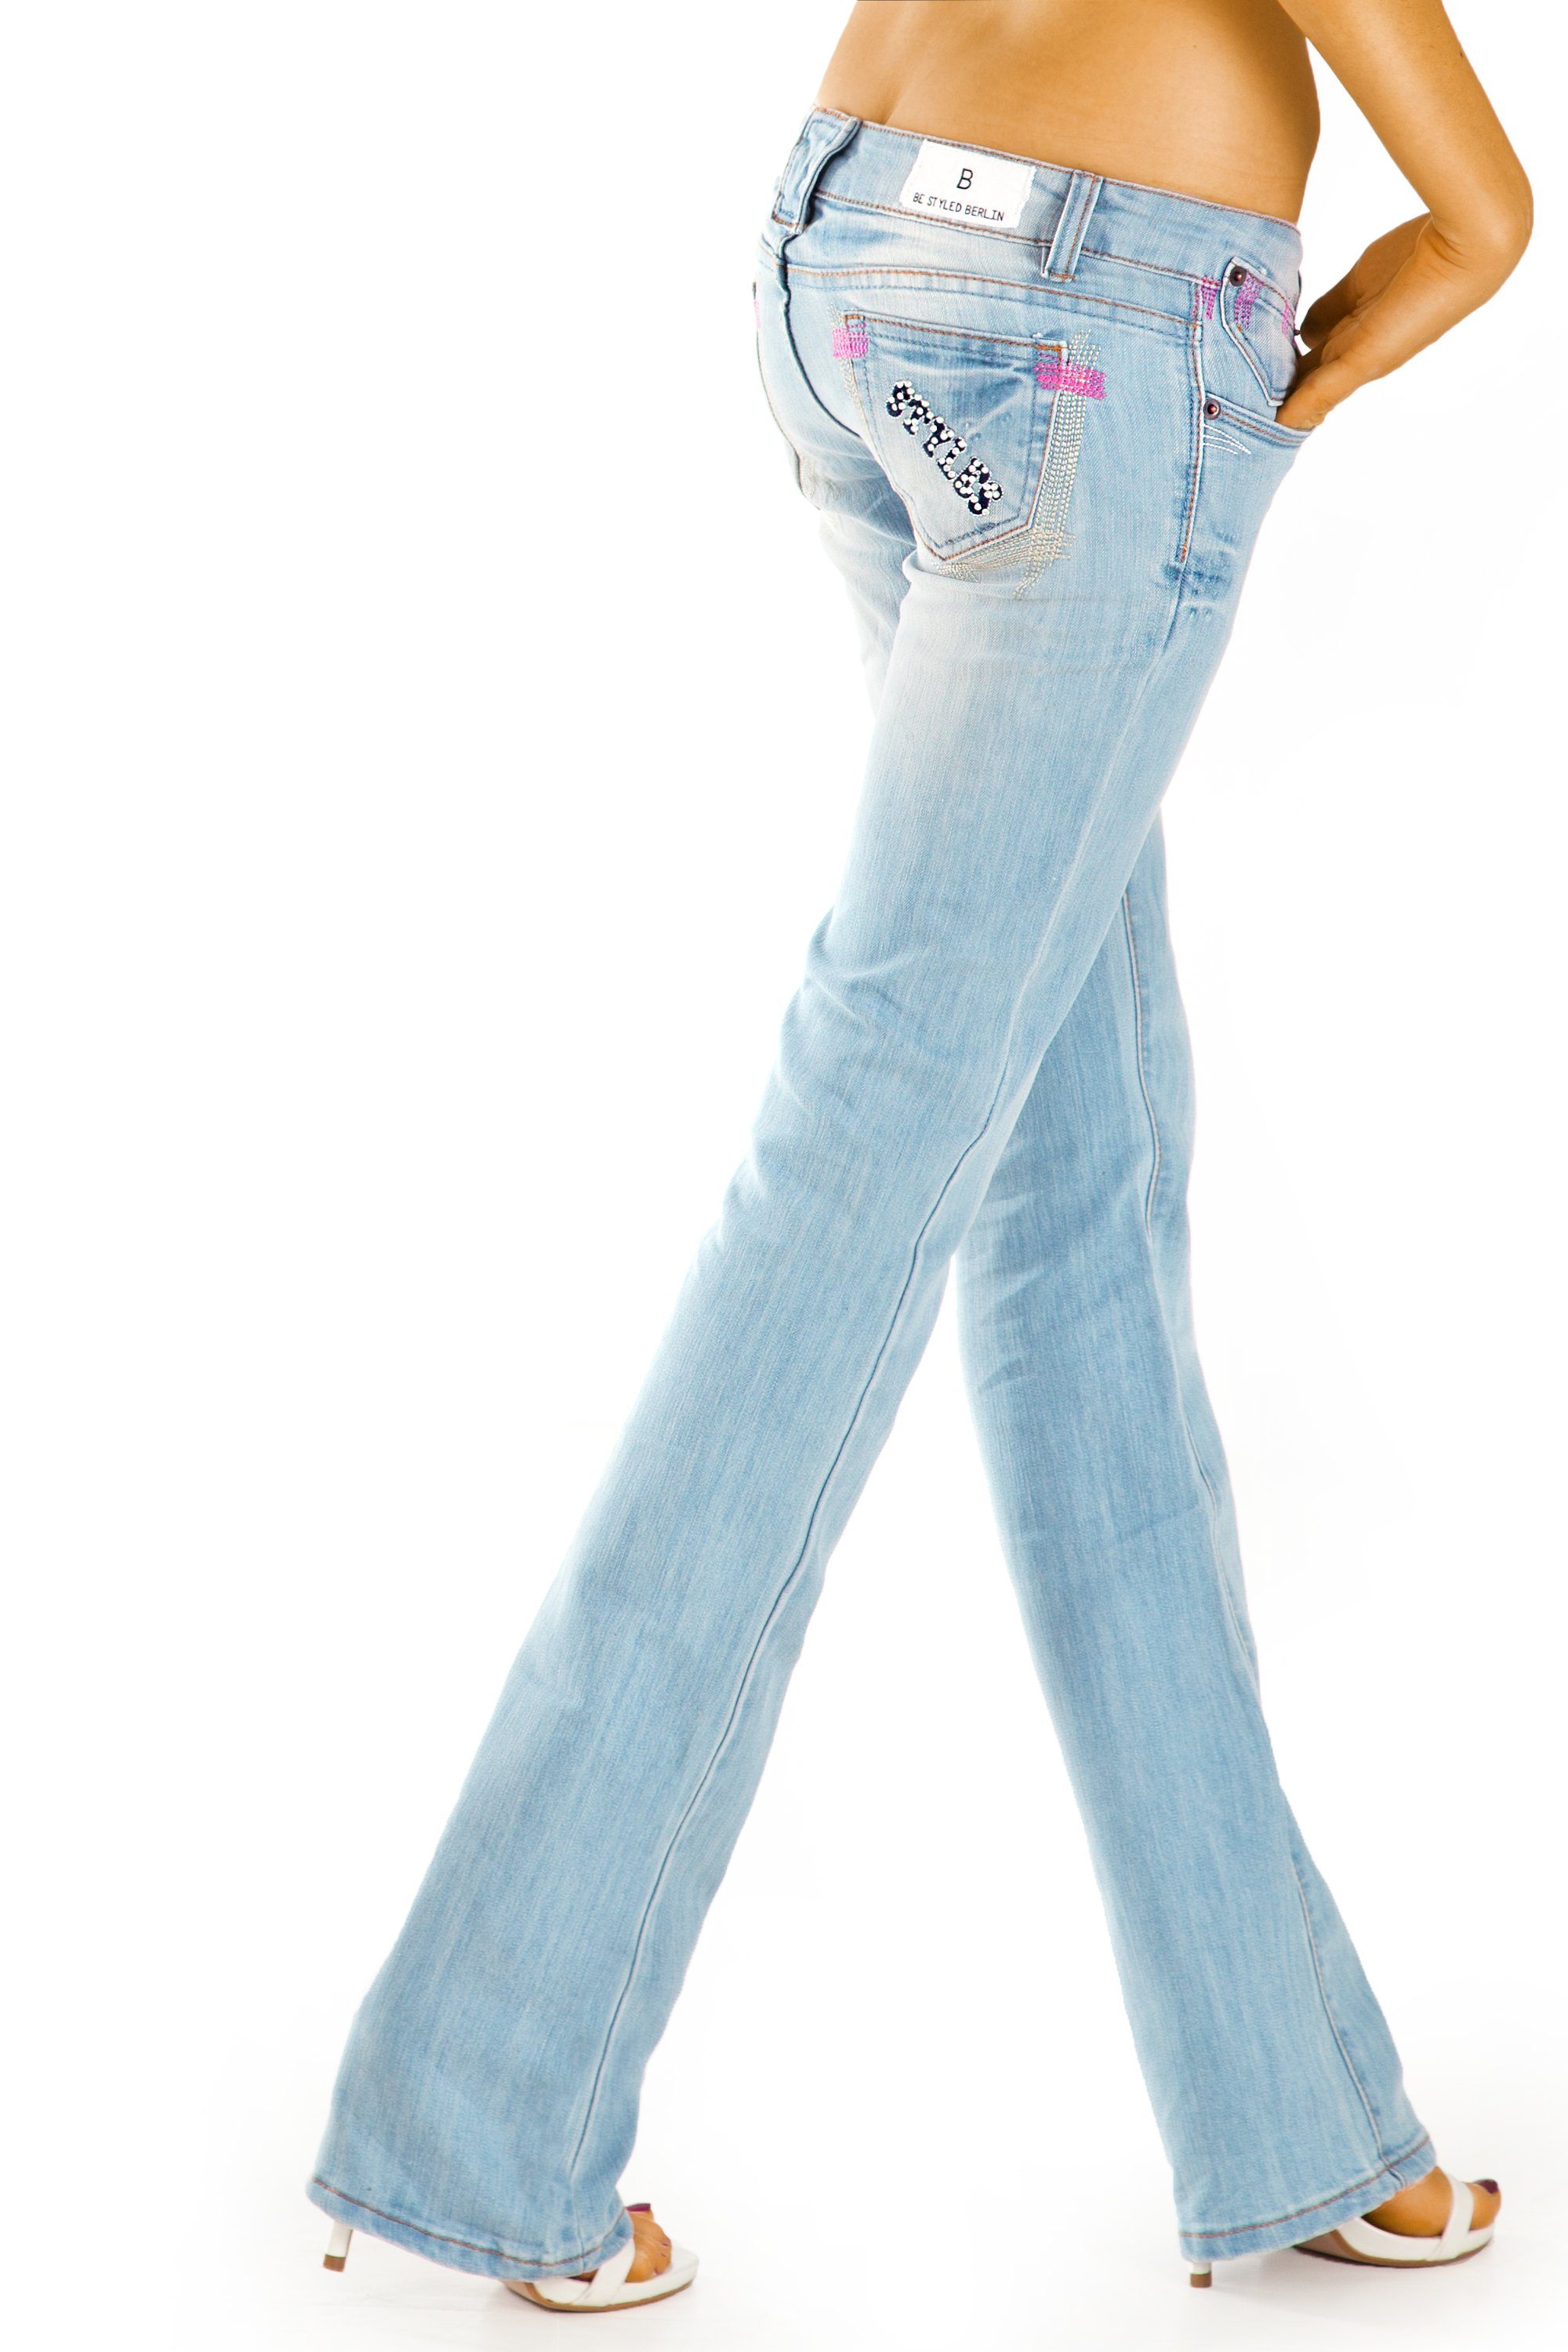 Hüftjeans - styled Damen Jeanshose j37a-1 sehr tiefer Bootcut-Jeans Bootcut niedrige extrem be Stretch-Anteil, Leibhöhe, 5-pOcket-Style mit - Leibhöhe